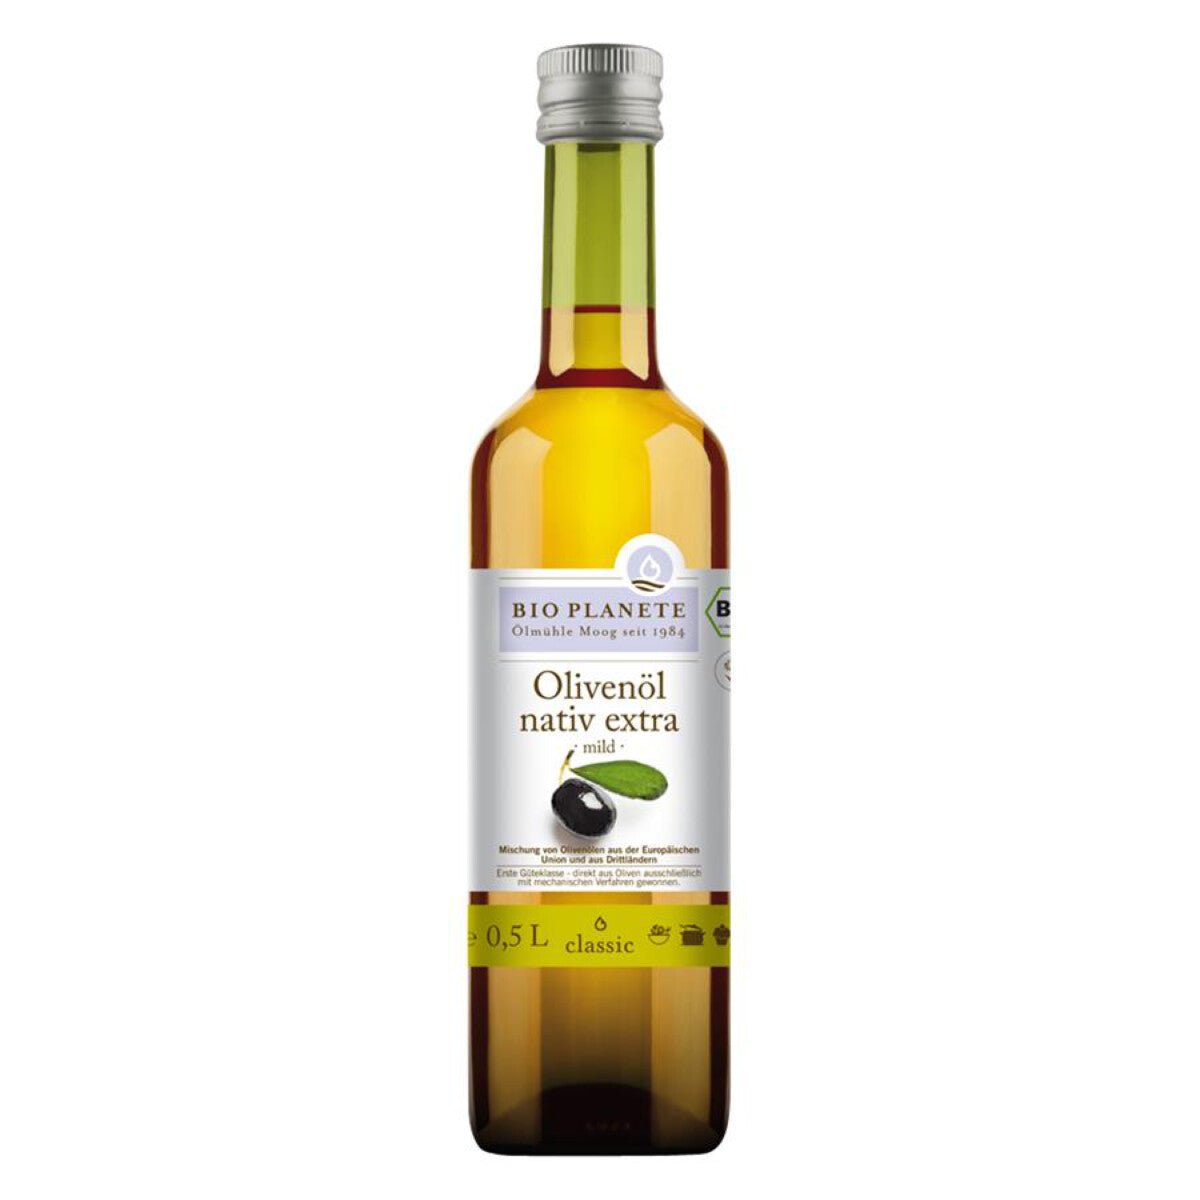 BIO PLANETE Olivenöl mild, nativ extra - 0,5 l